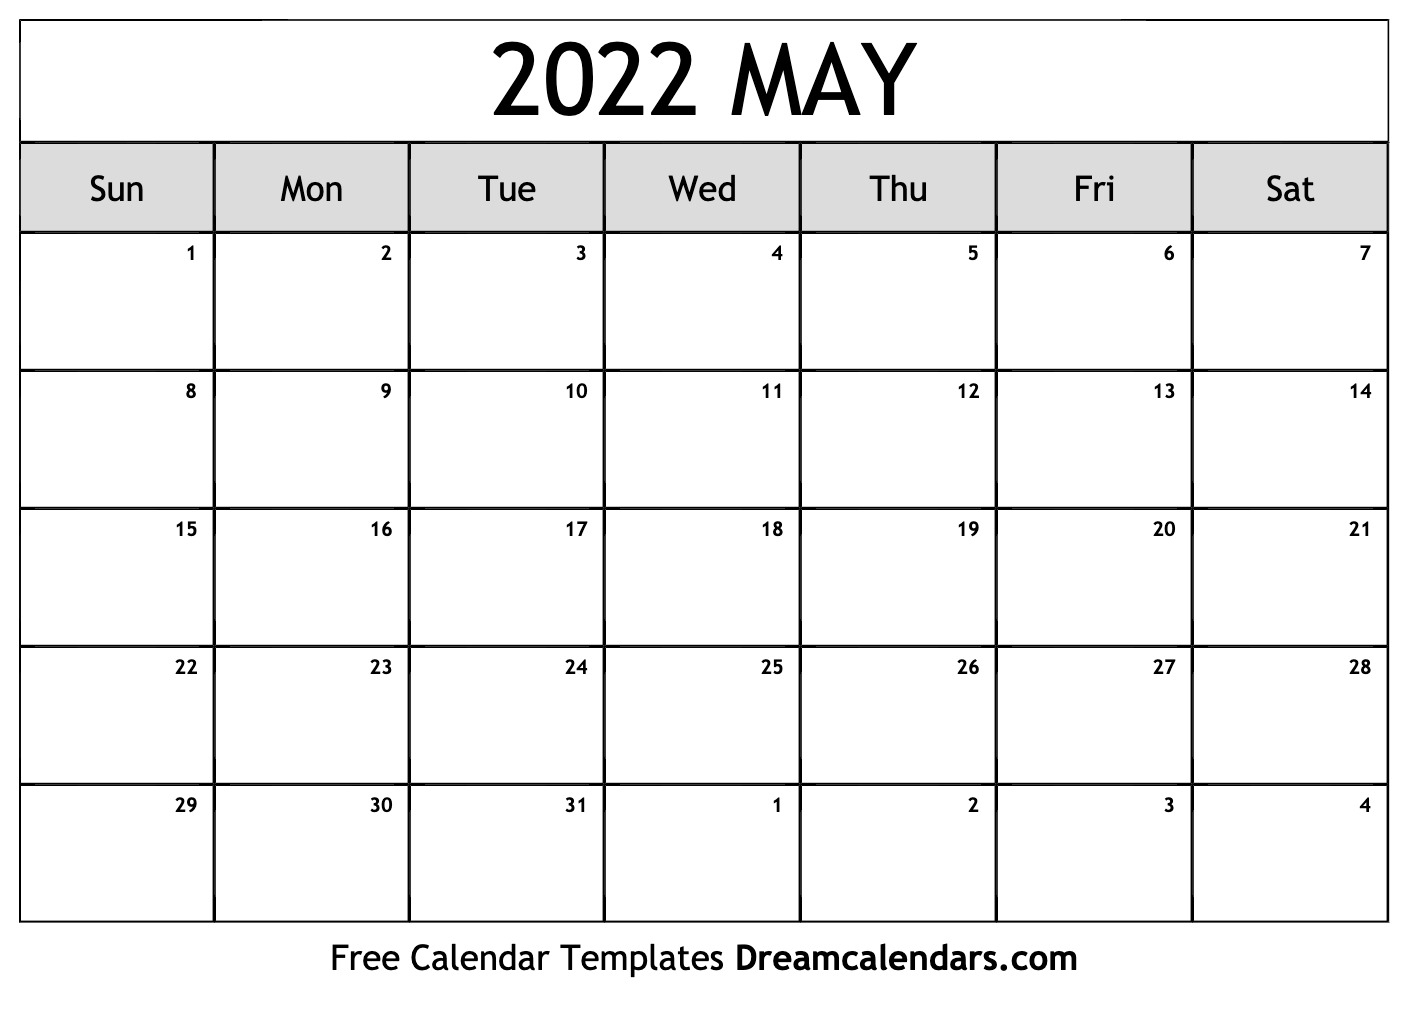 May 2022 Calendar | Free Blank Printable Templates